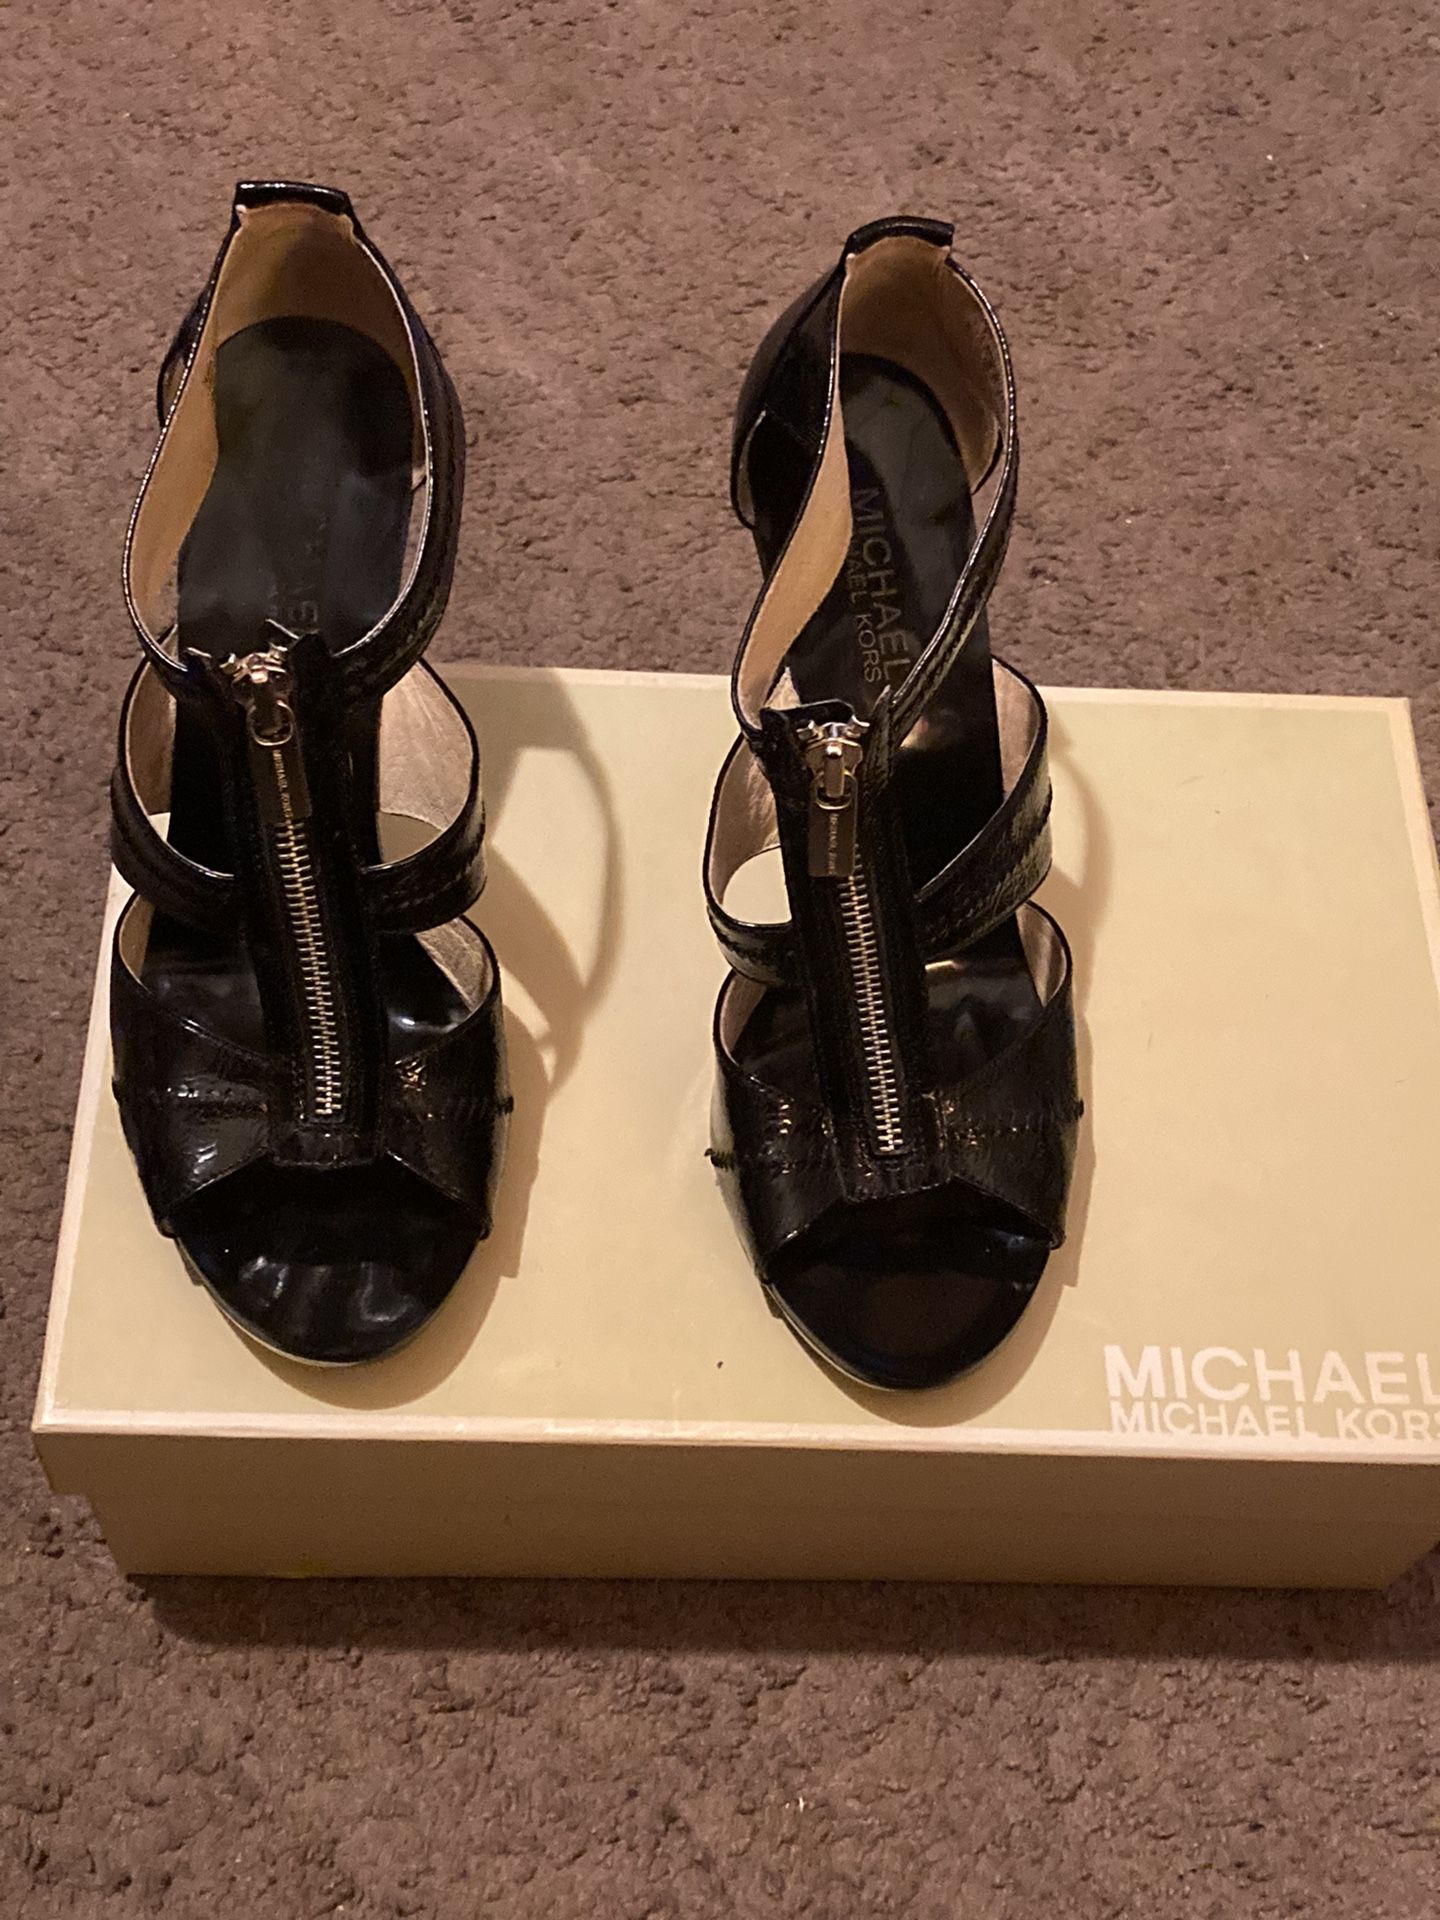 Michael Kors T strap 9 heels